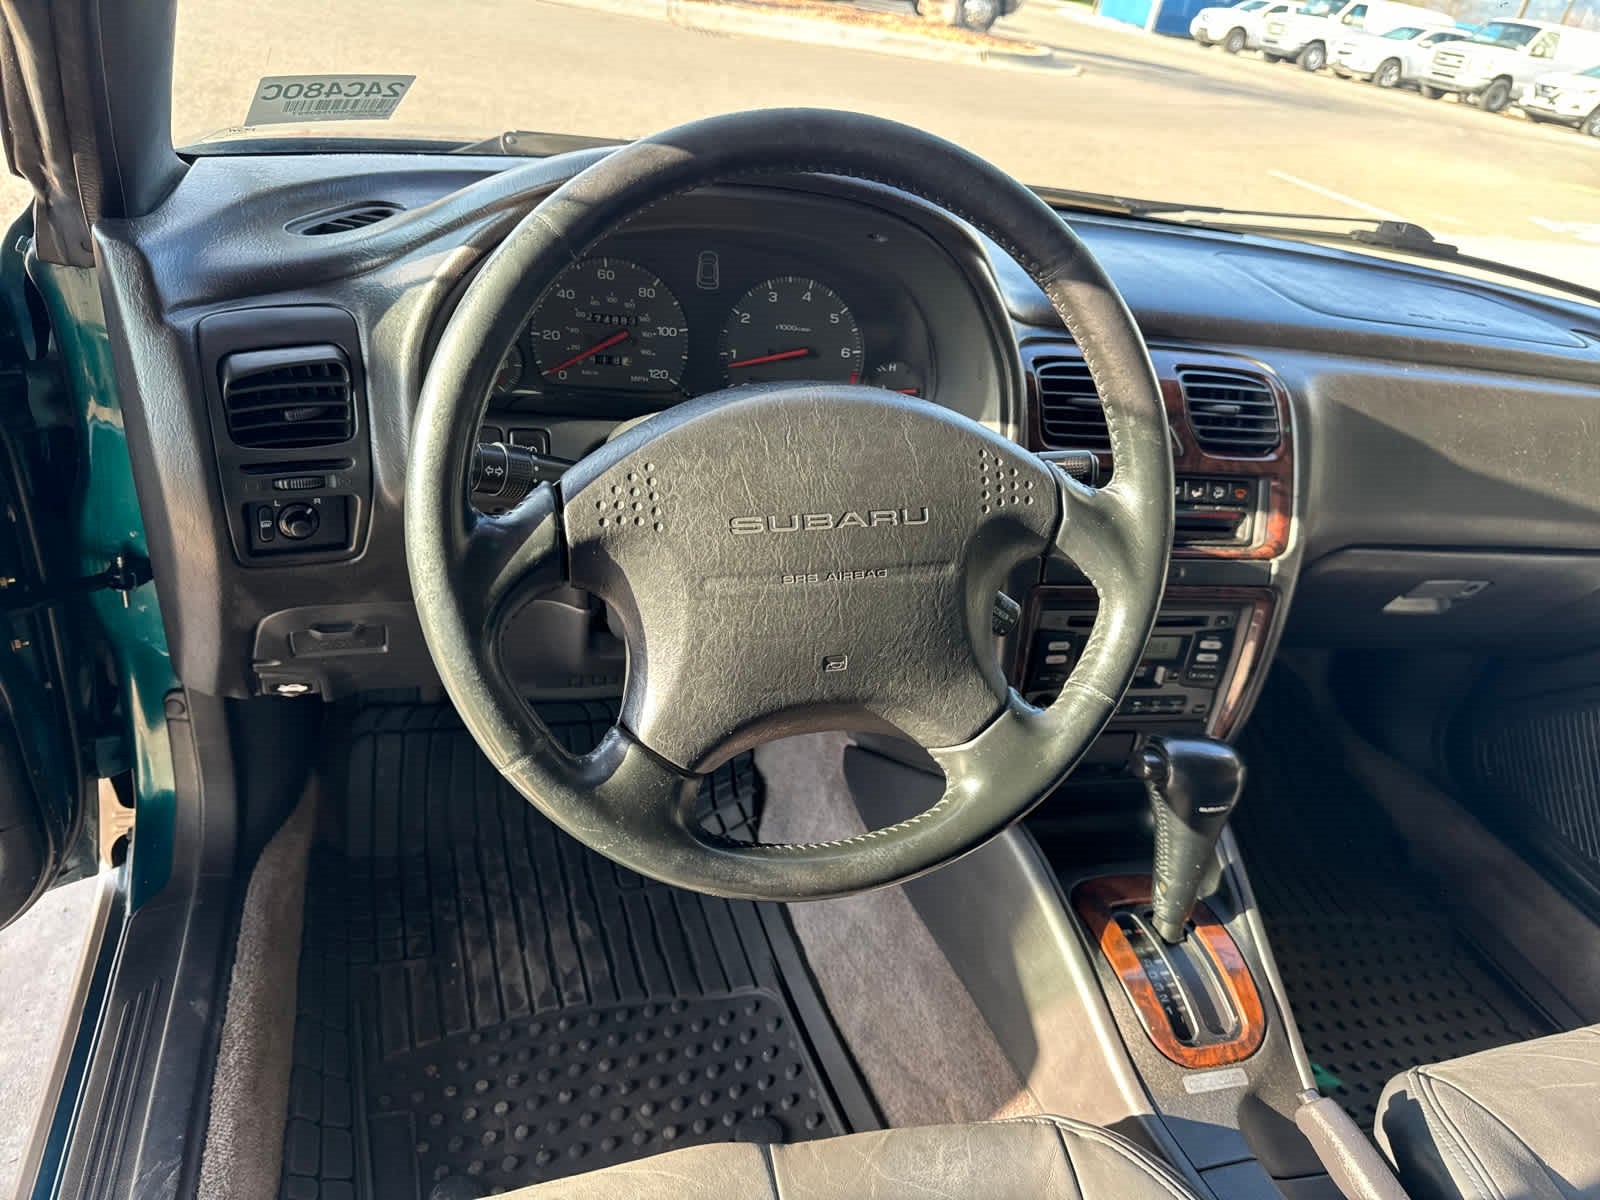 1998 Subaru Legacy Wagon Outback